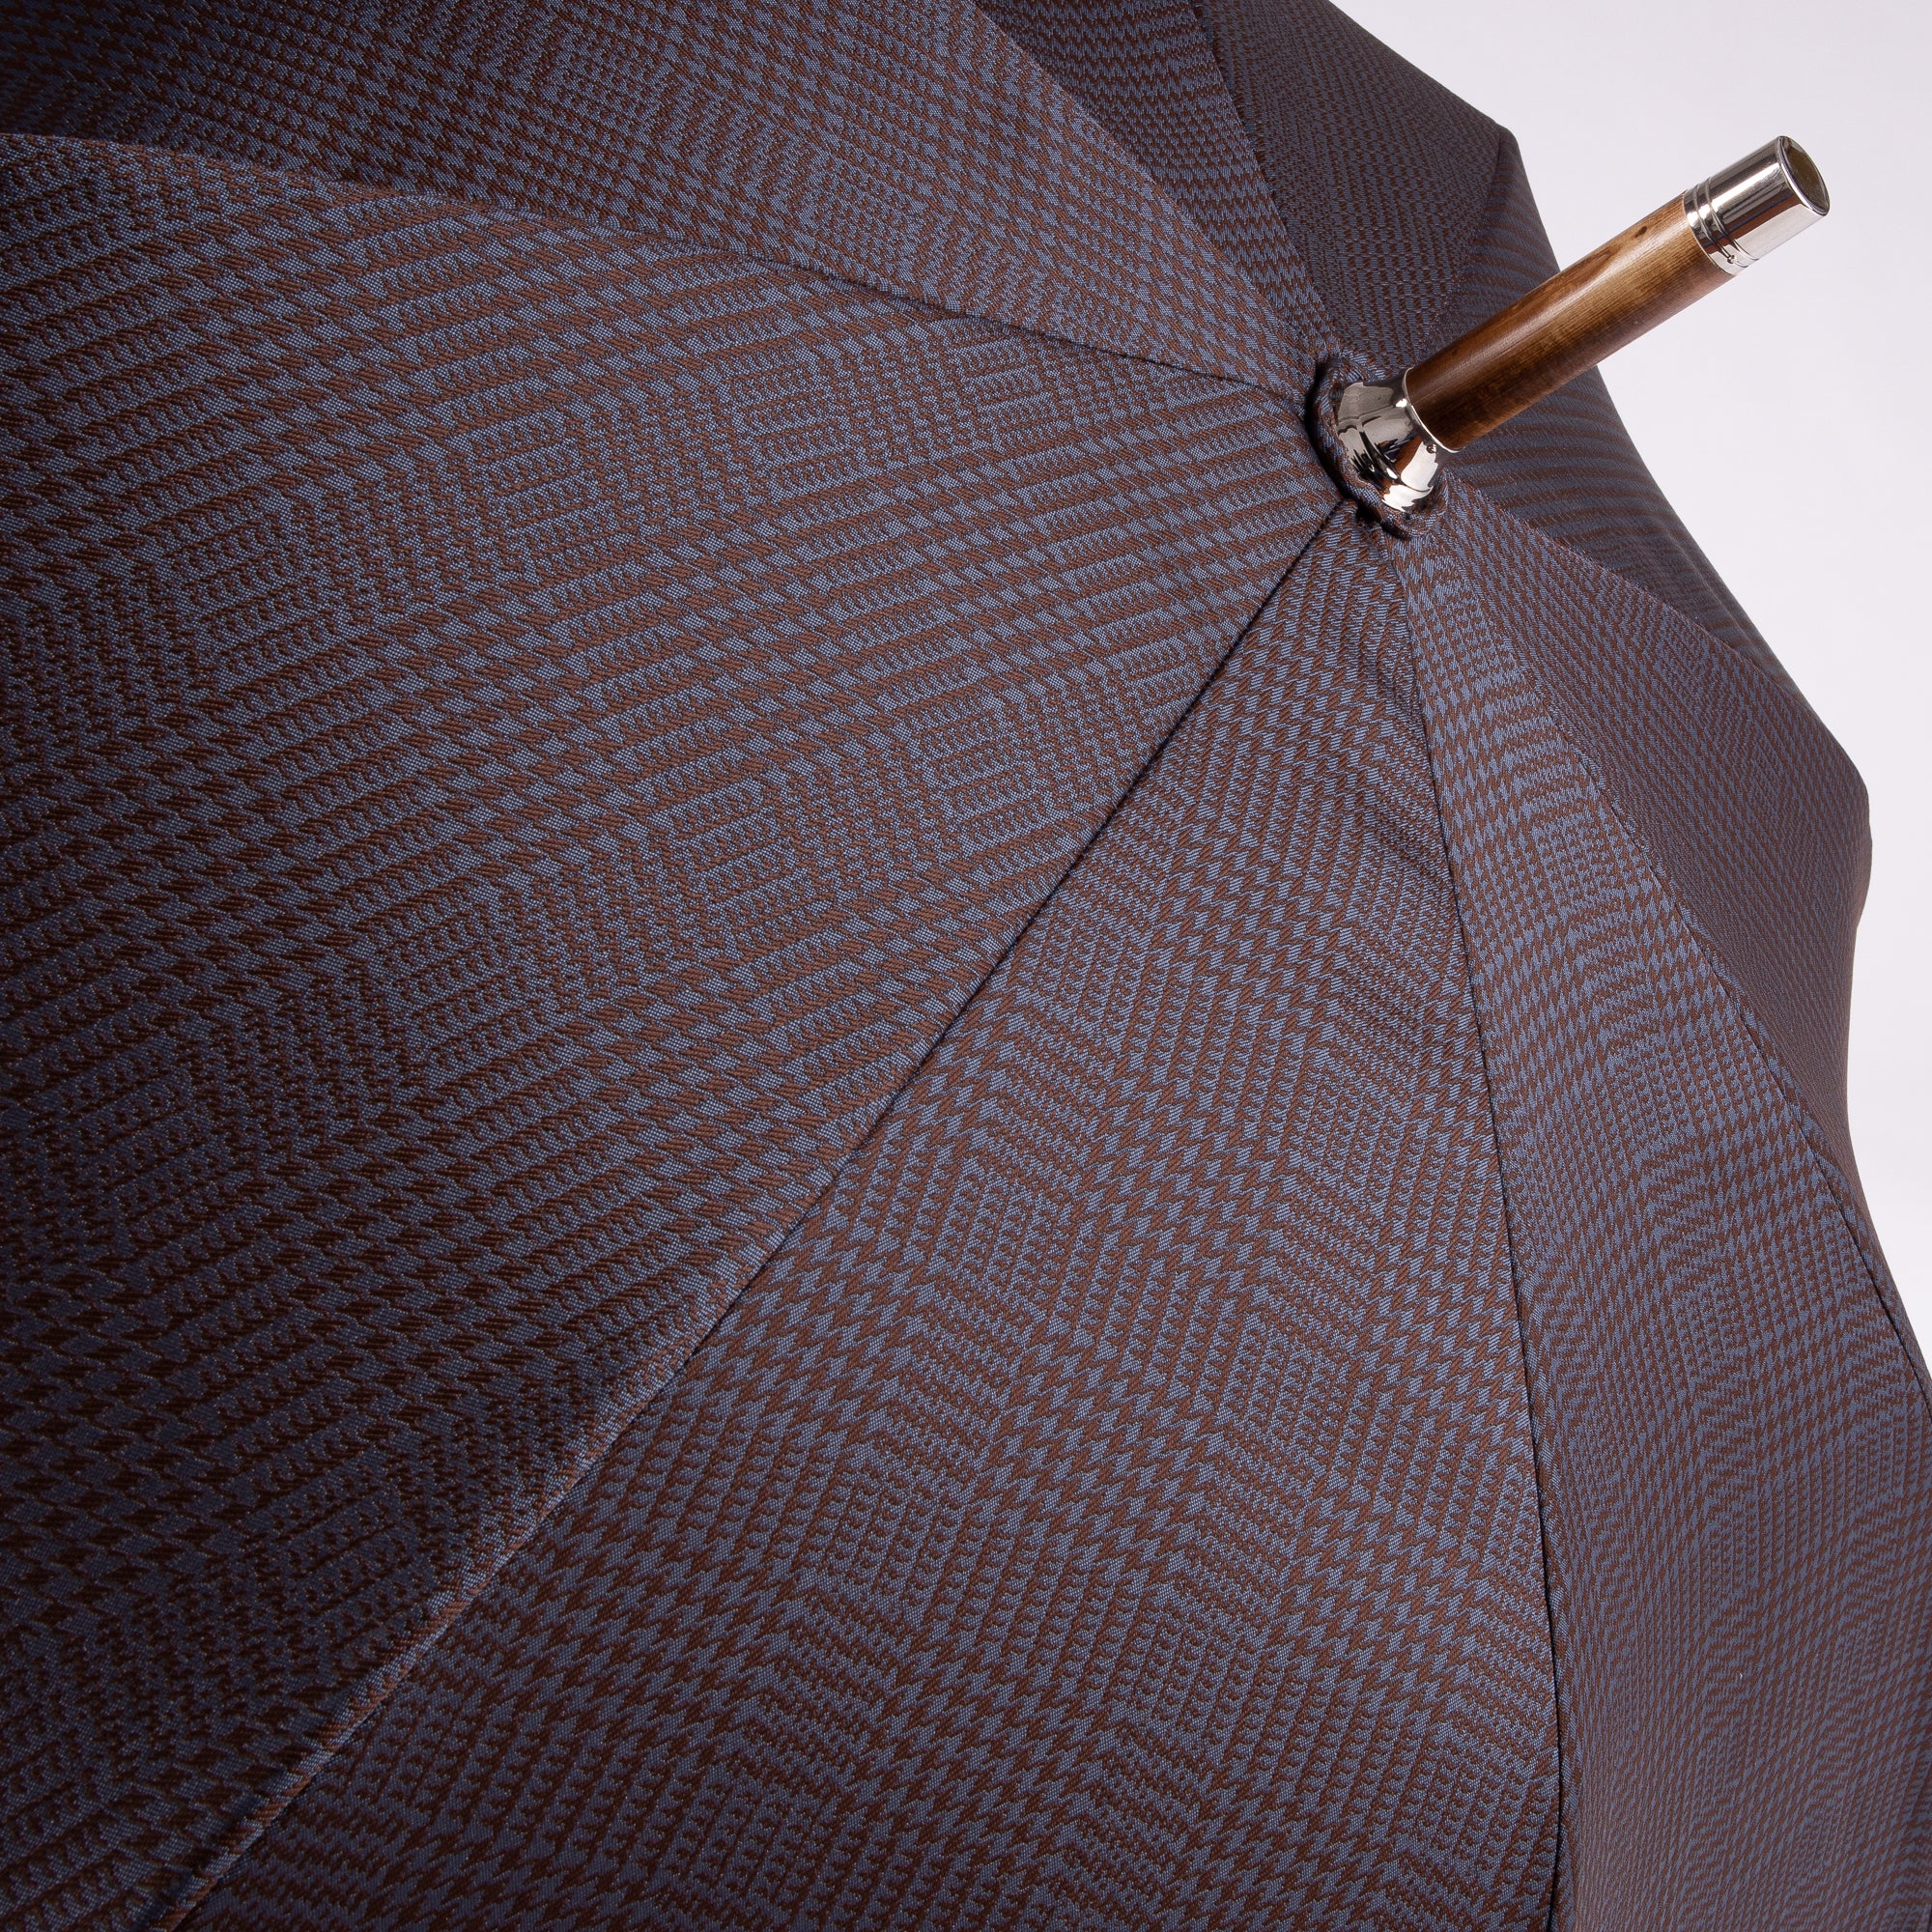 Polished Chestnut Umbrella